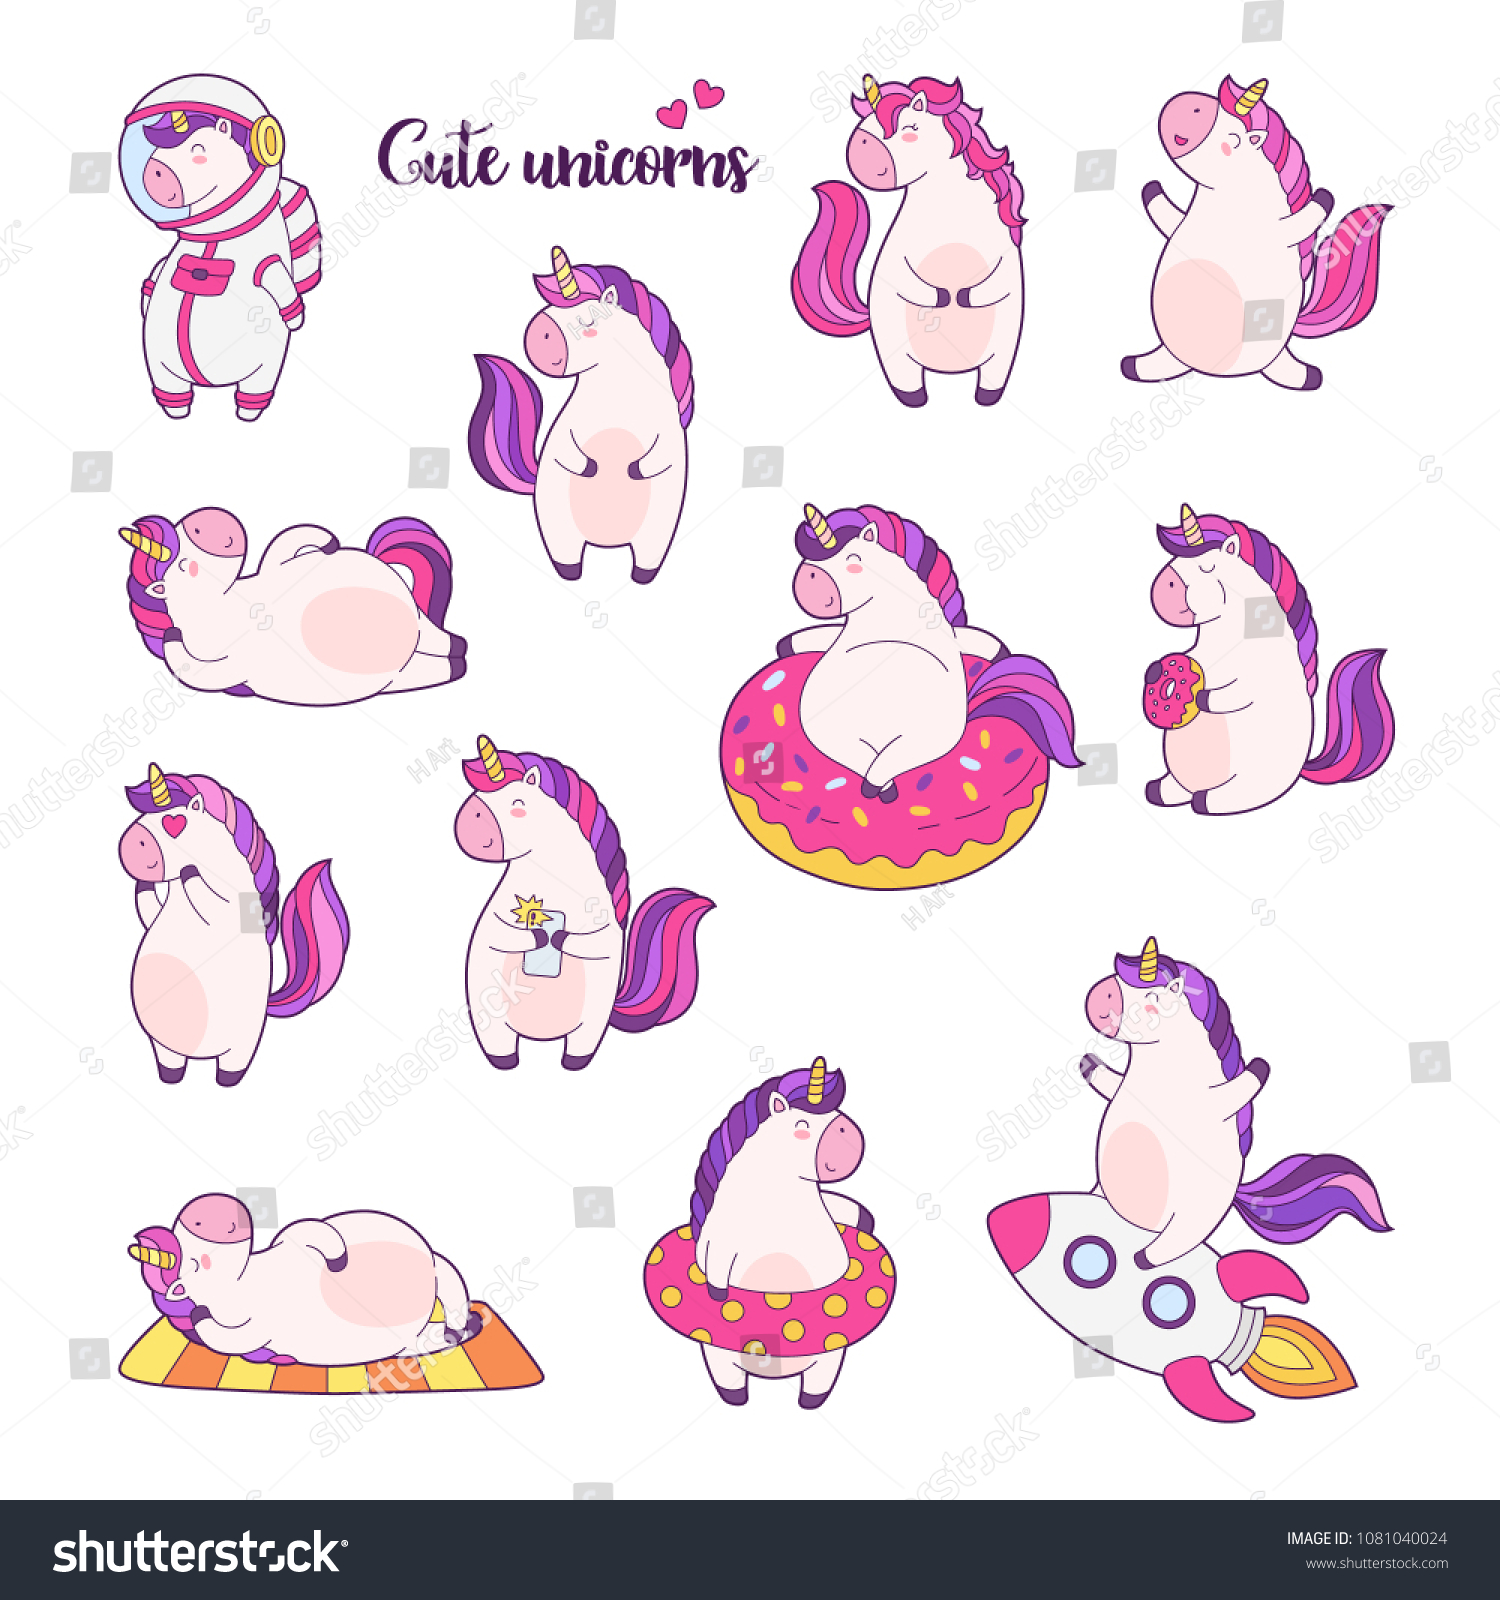 download chubby unicorn to photoshop